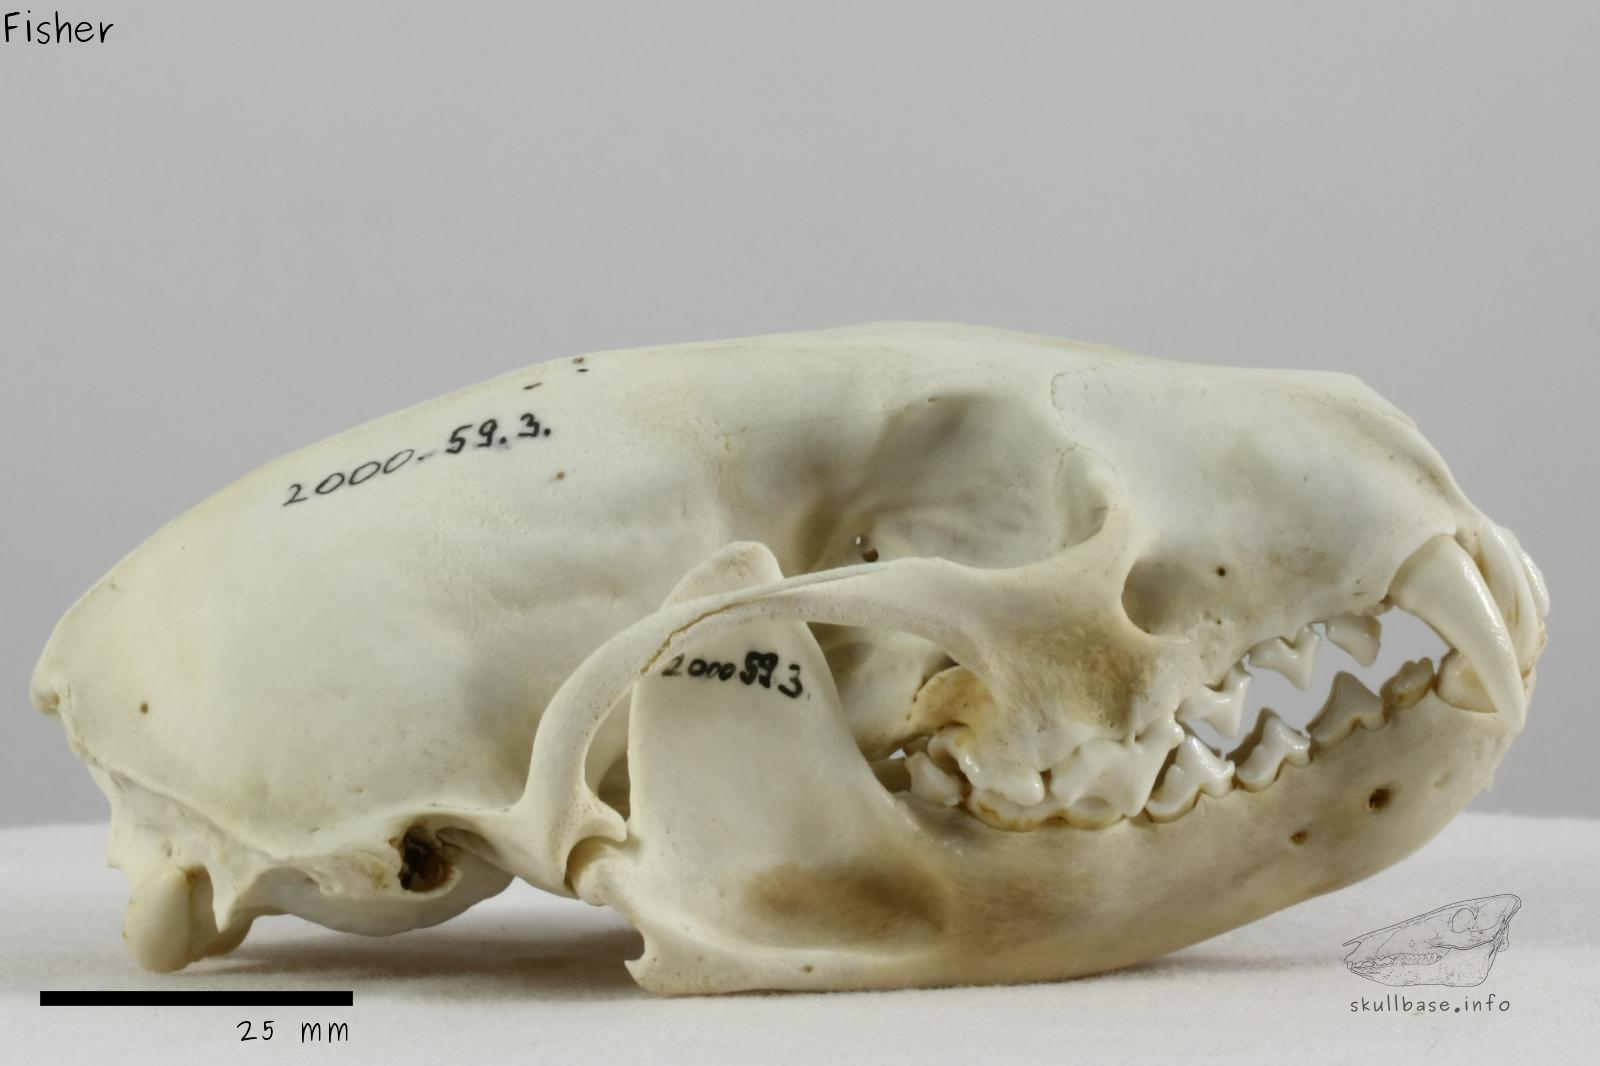 Fisher (Pekania pennanti) skull lateral view